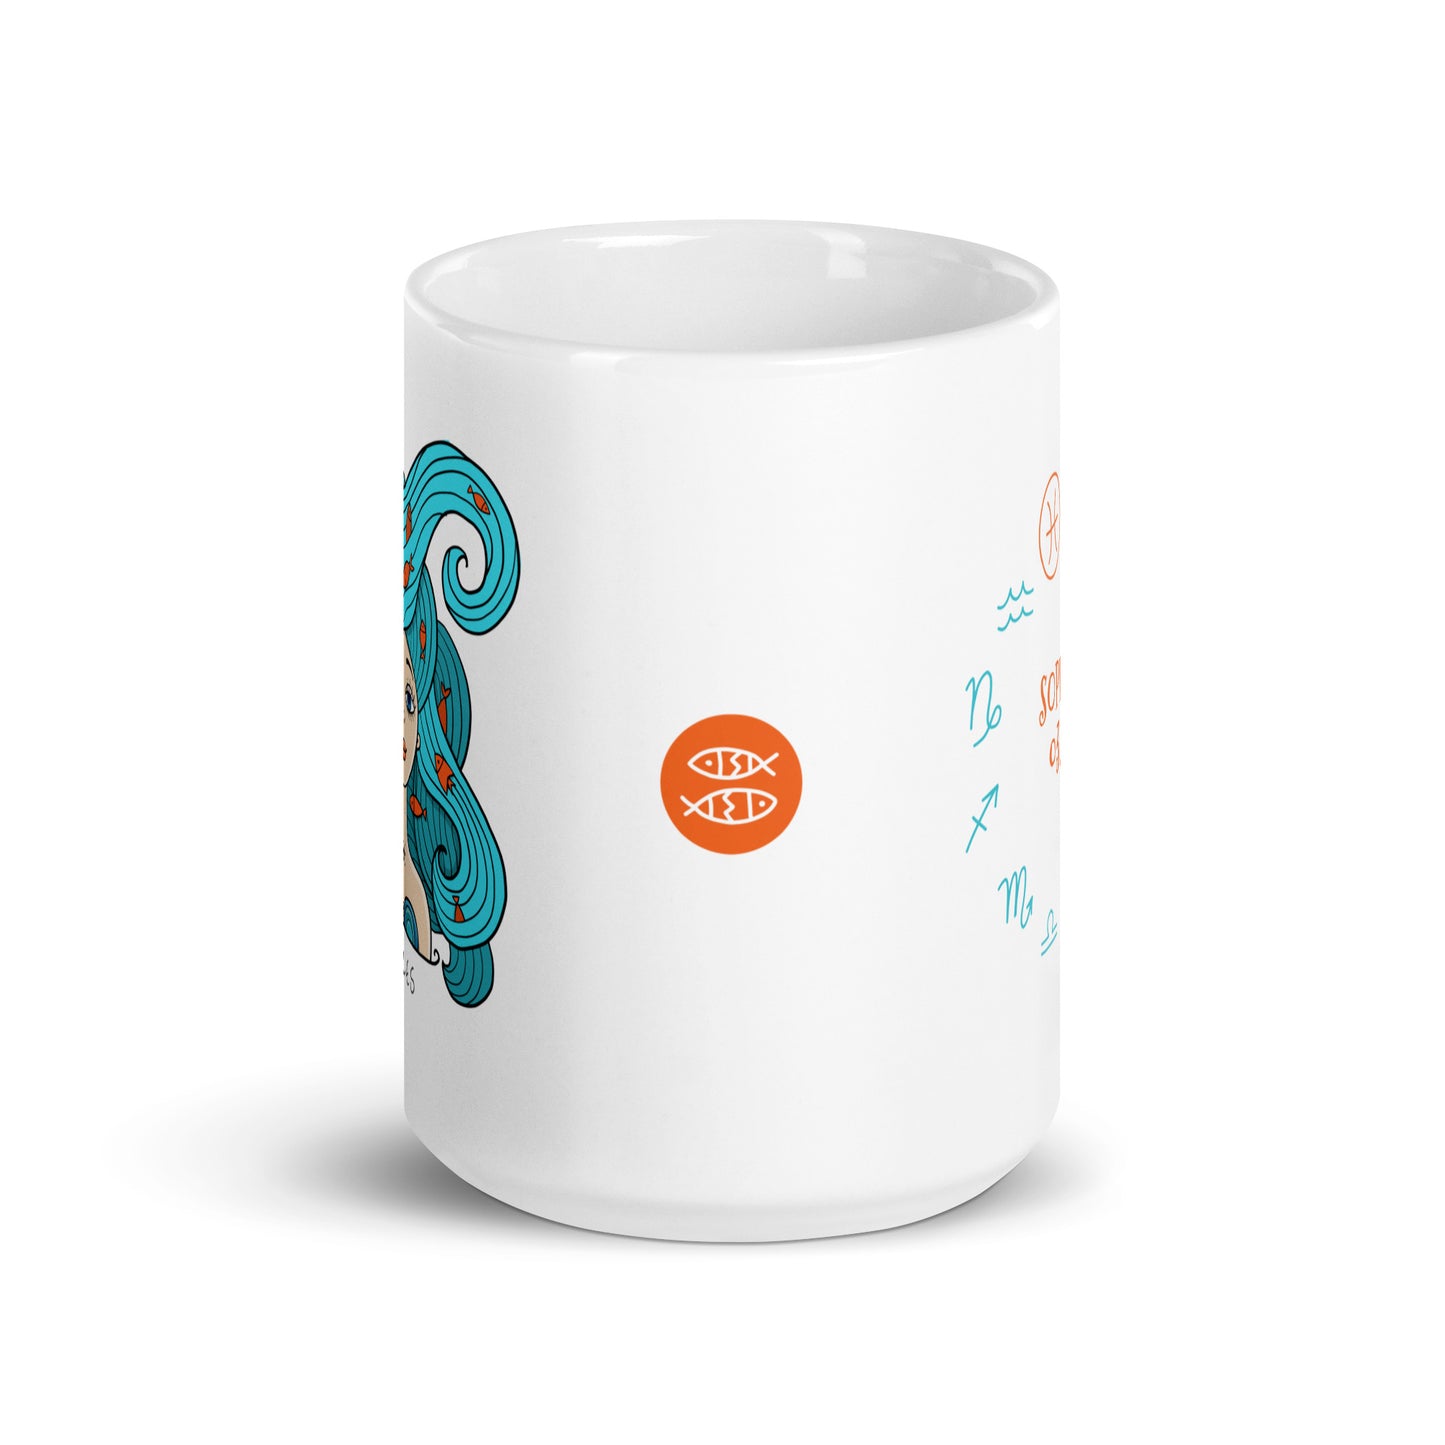 Astrology Pisces. Personalised Mug